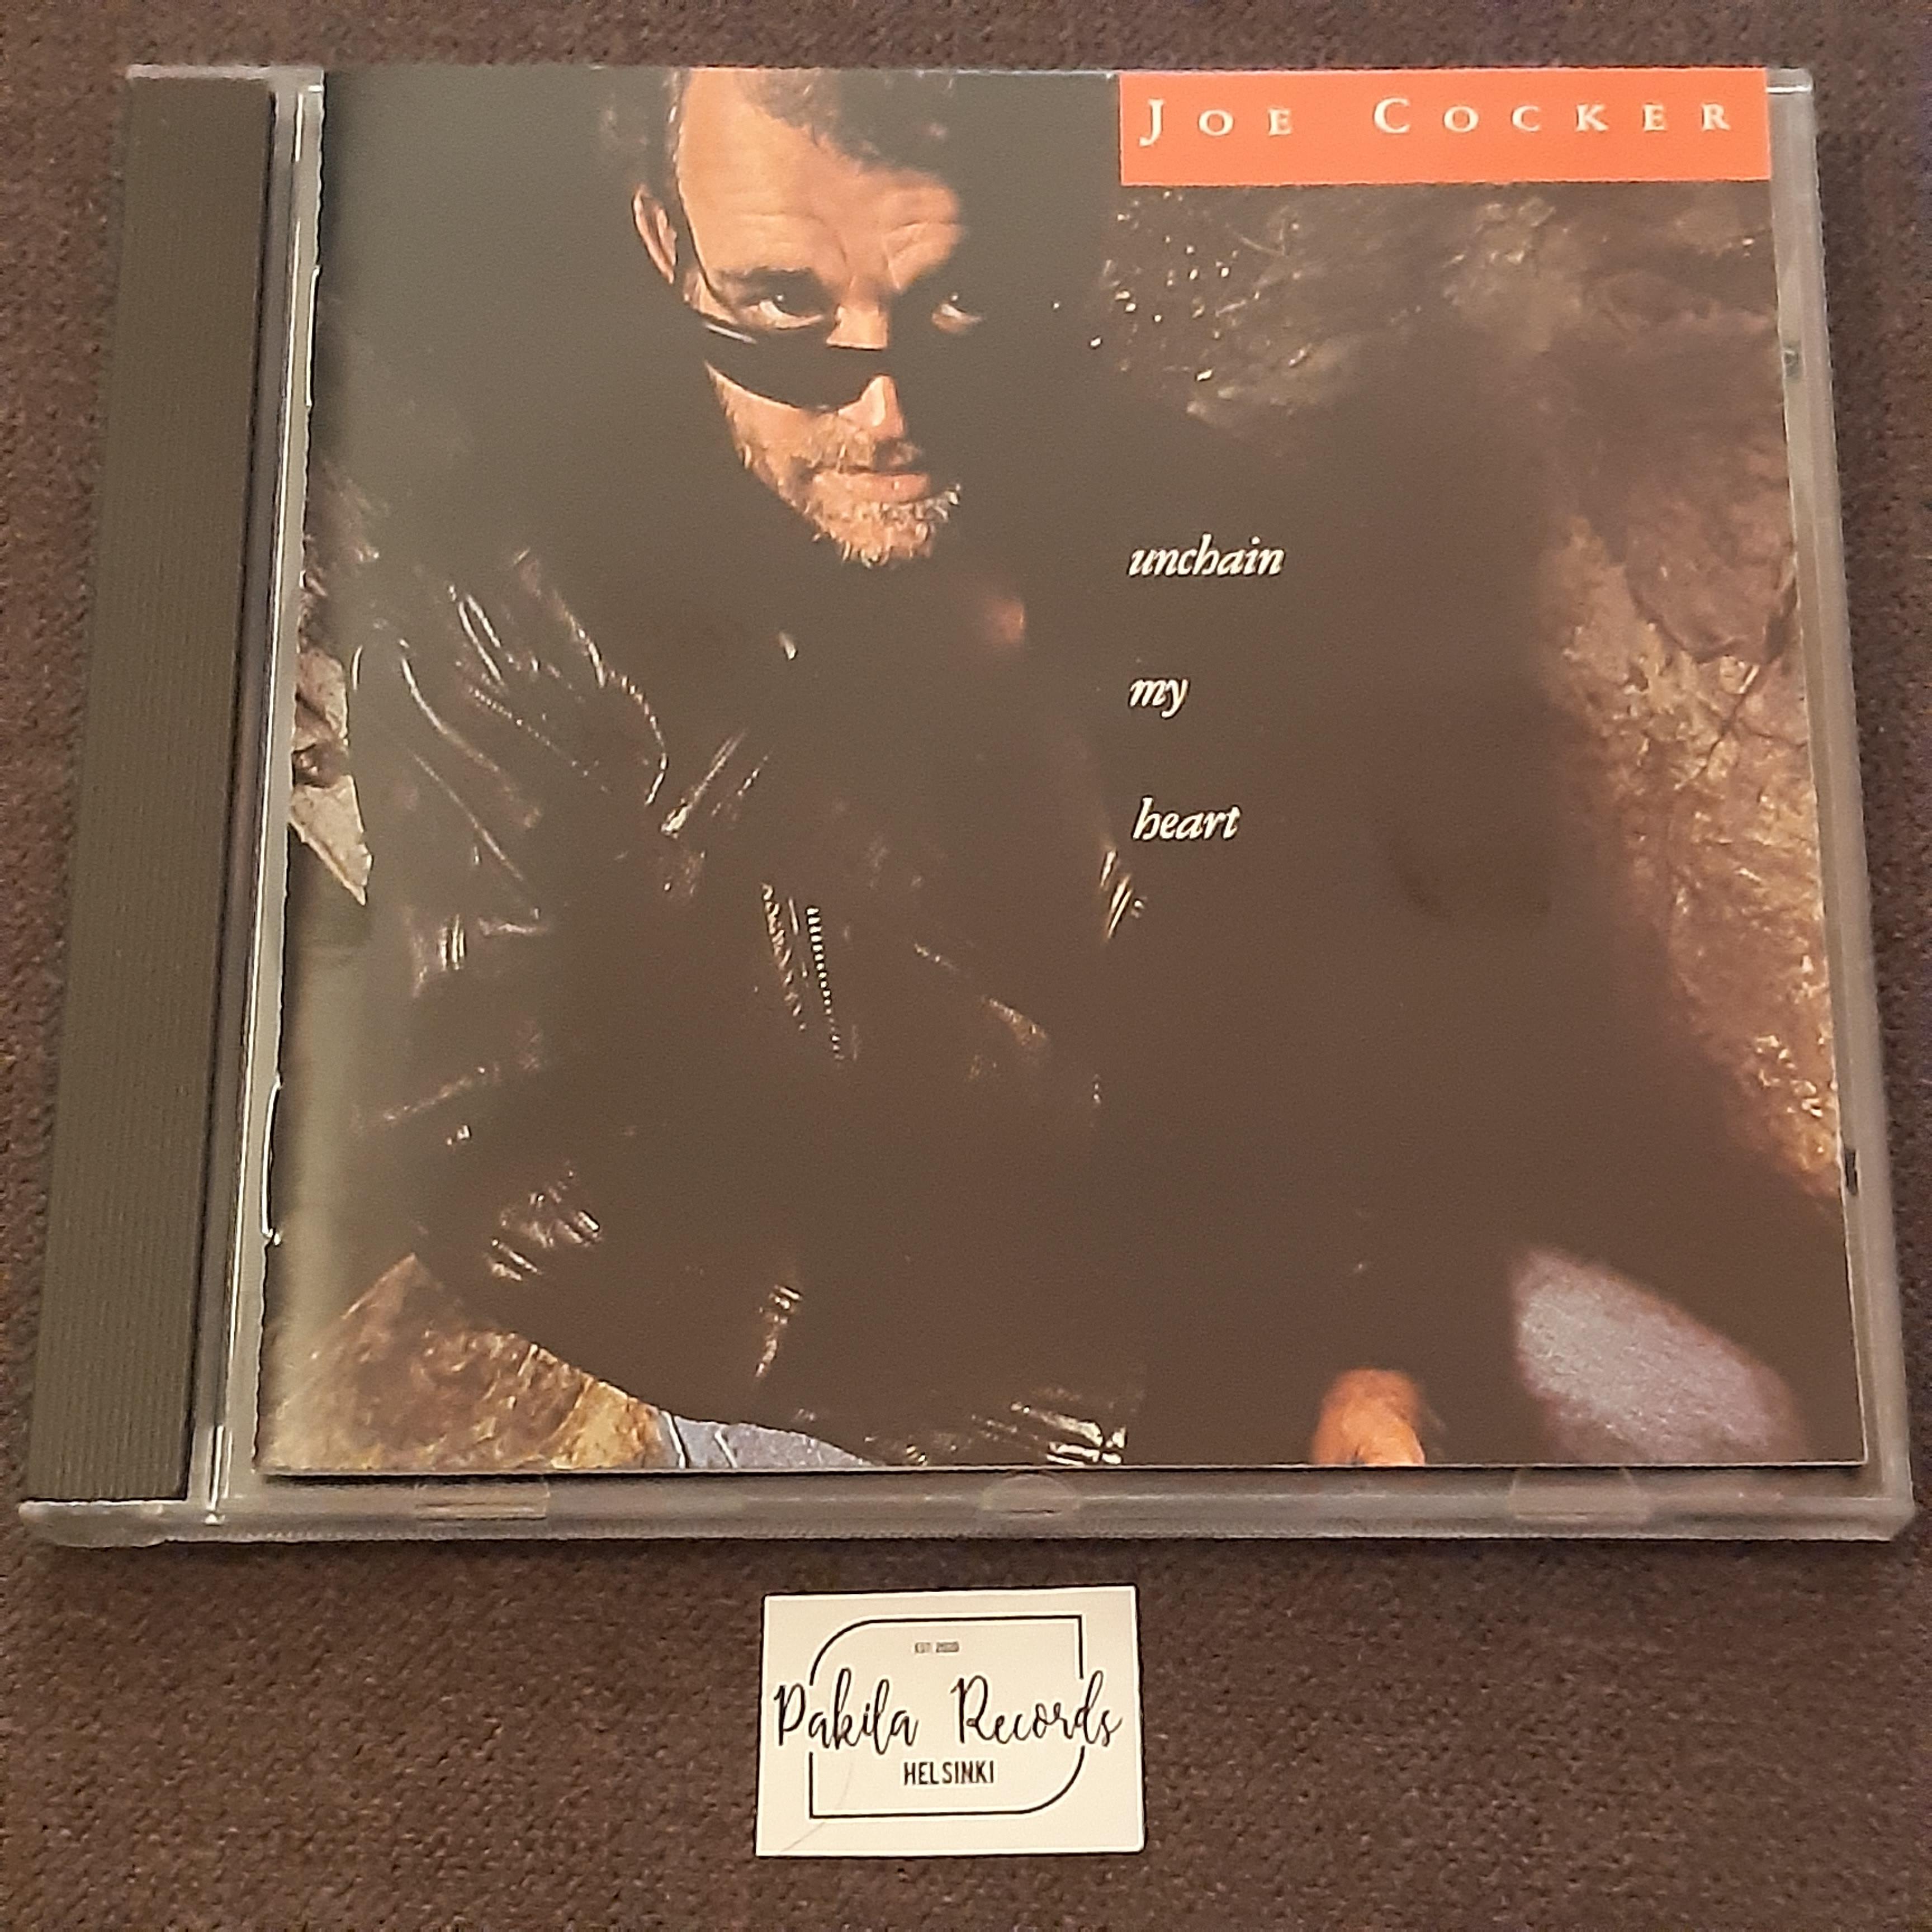 Joe Cocker - Unchain My Heart - CD (käytetty)